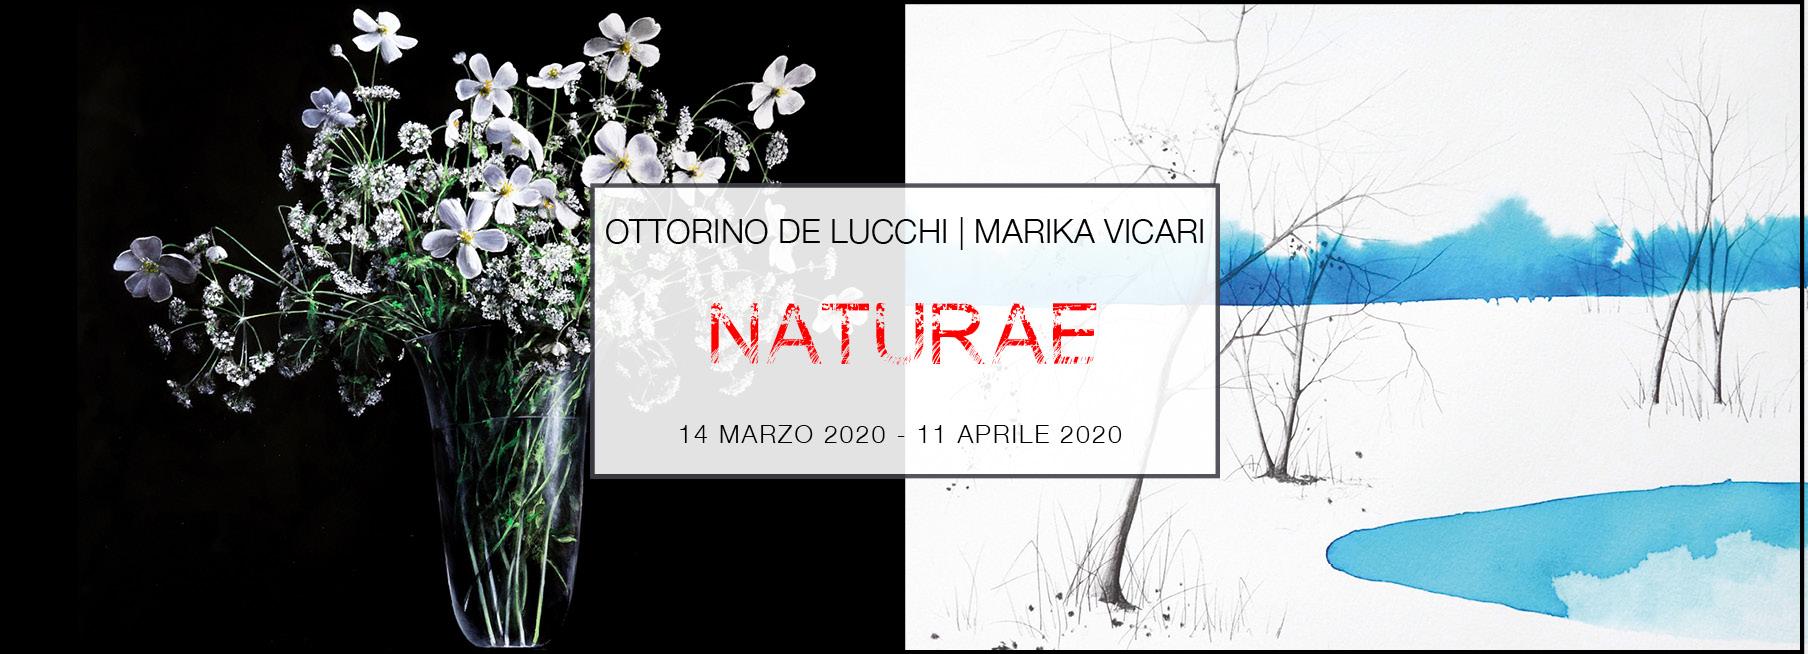 OTTORINO DE LUCCHI - MARIKA VICARI | NATURAE